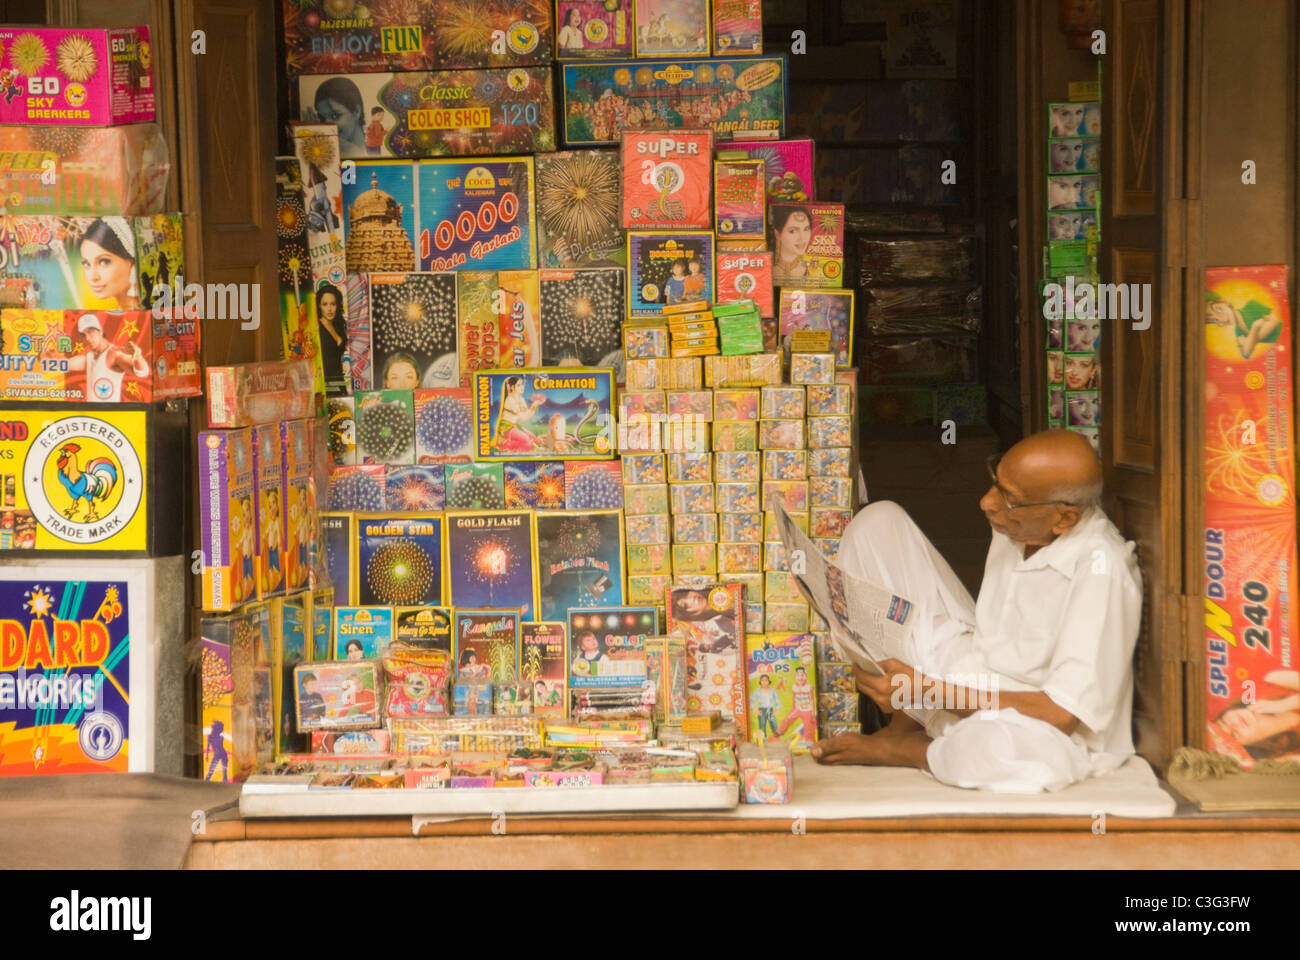 Vendor sitting in a fireworks store, Chandni Chowk, Delhi, India Stock Photo